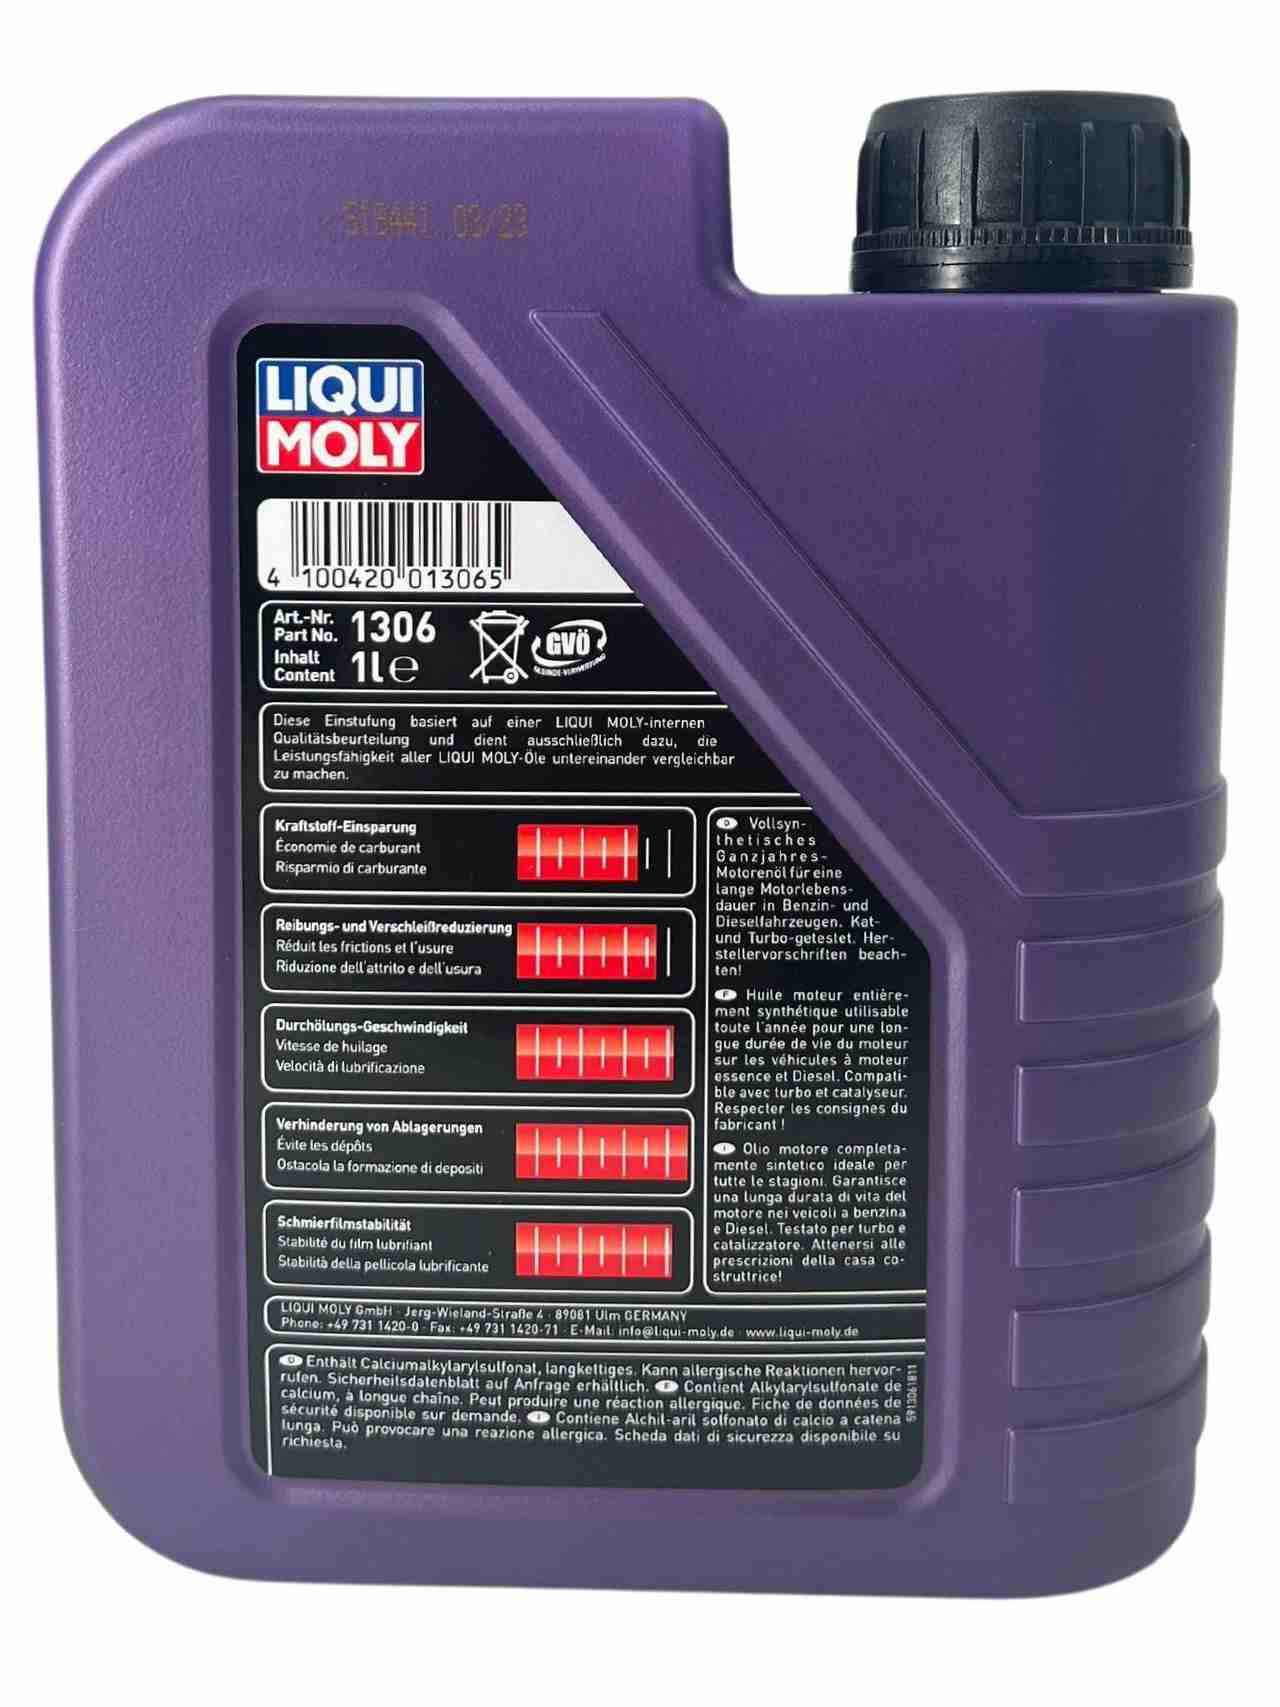 Liqui Moly Synthoil High Tech 5W-40 1 Liter